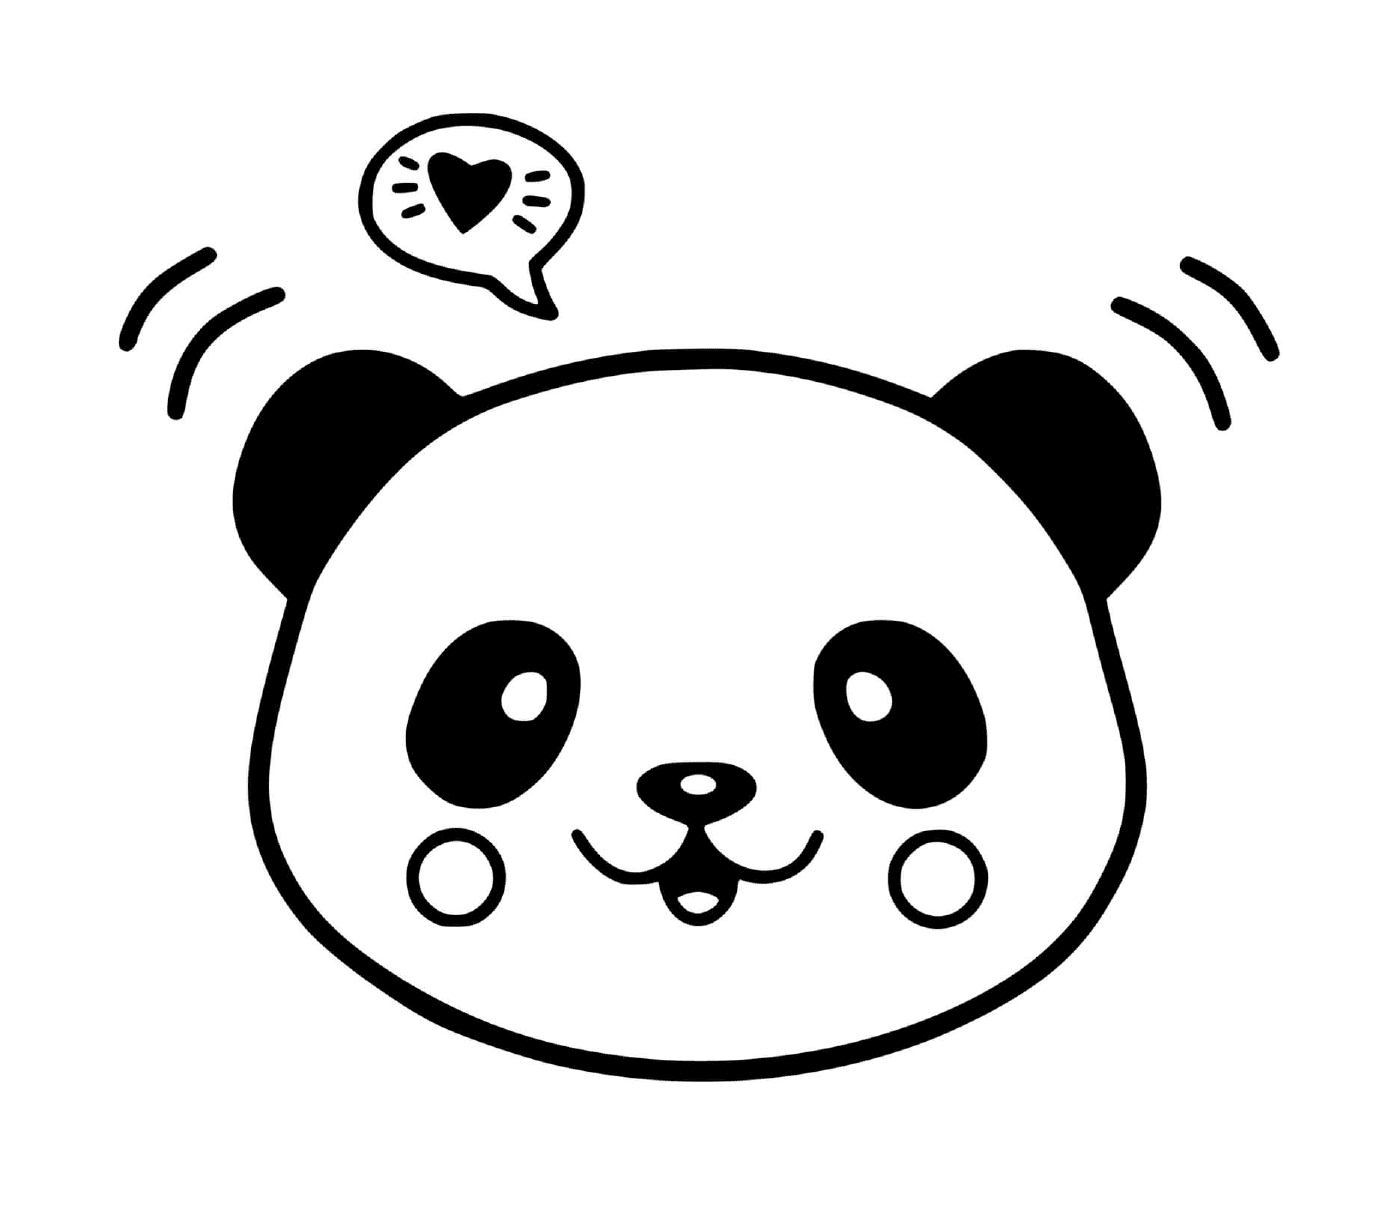  Un panda lindo 